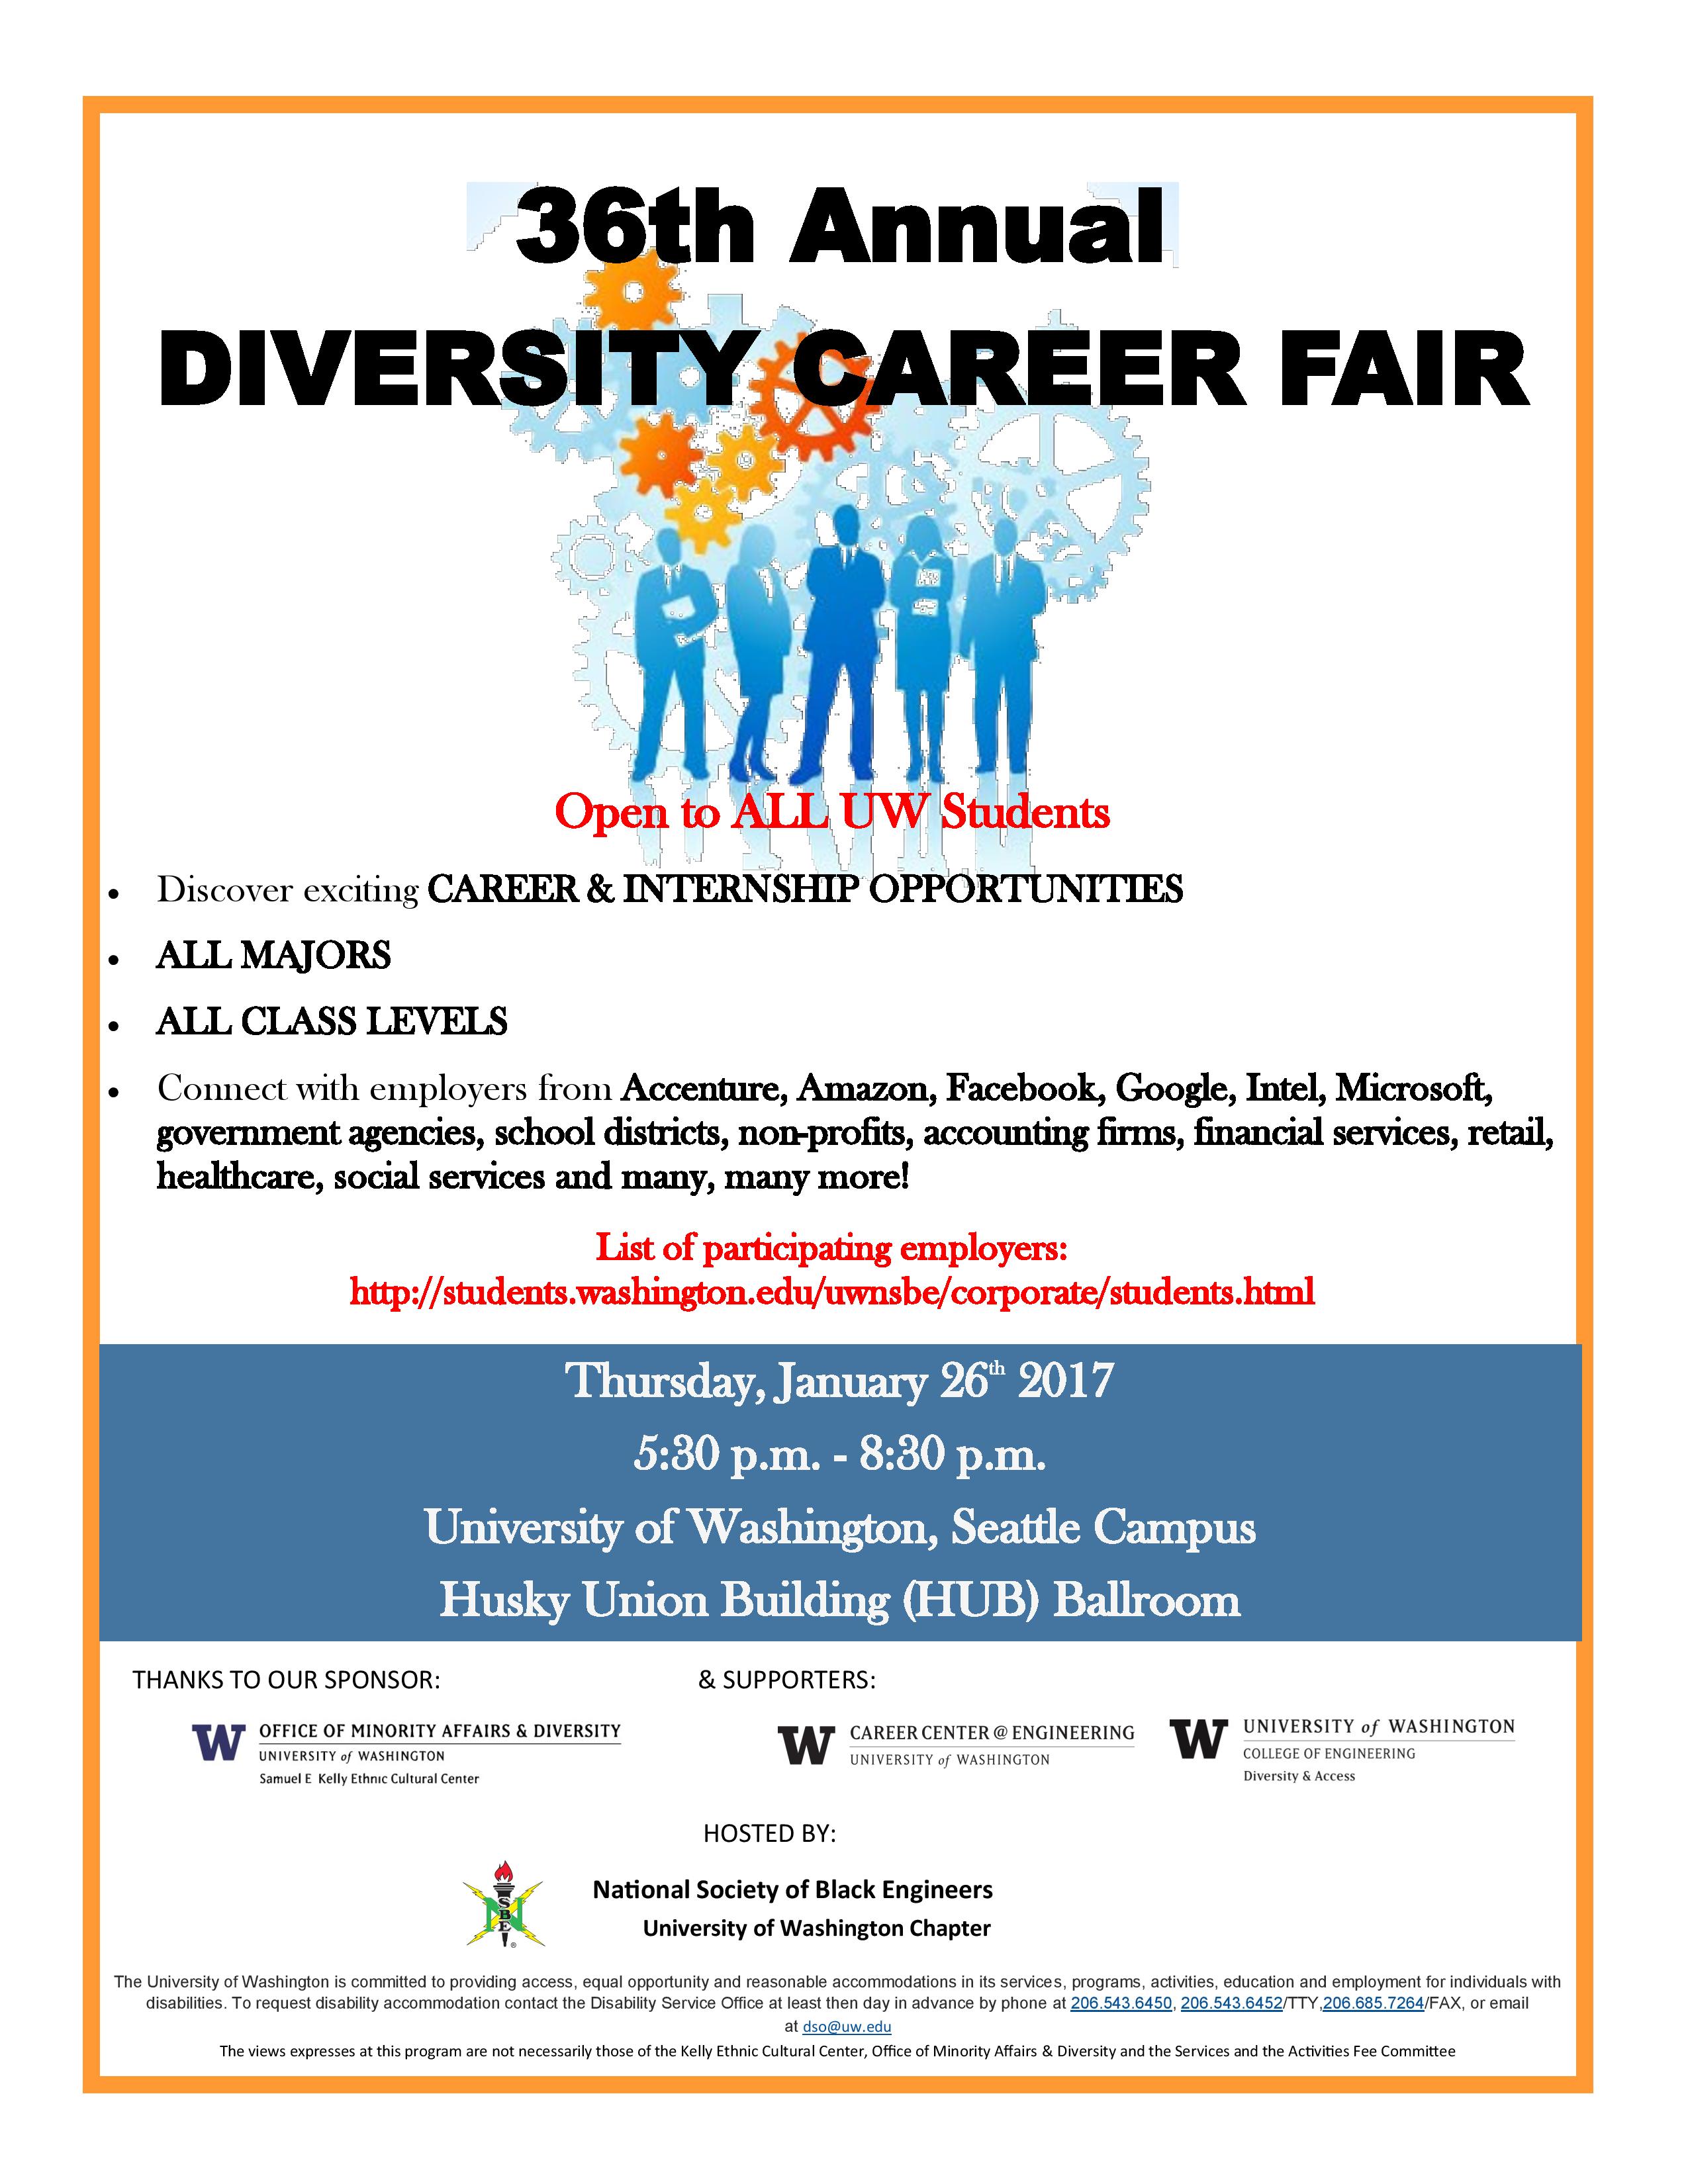 Diversity Career Fair!